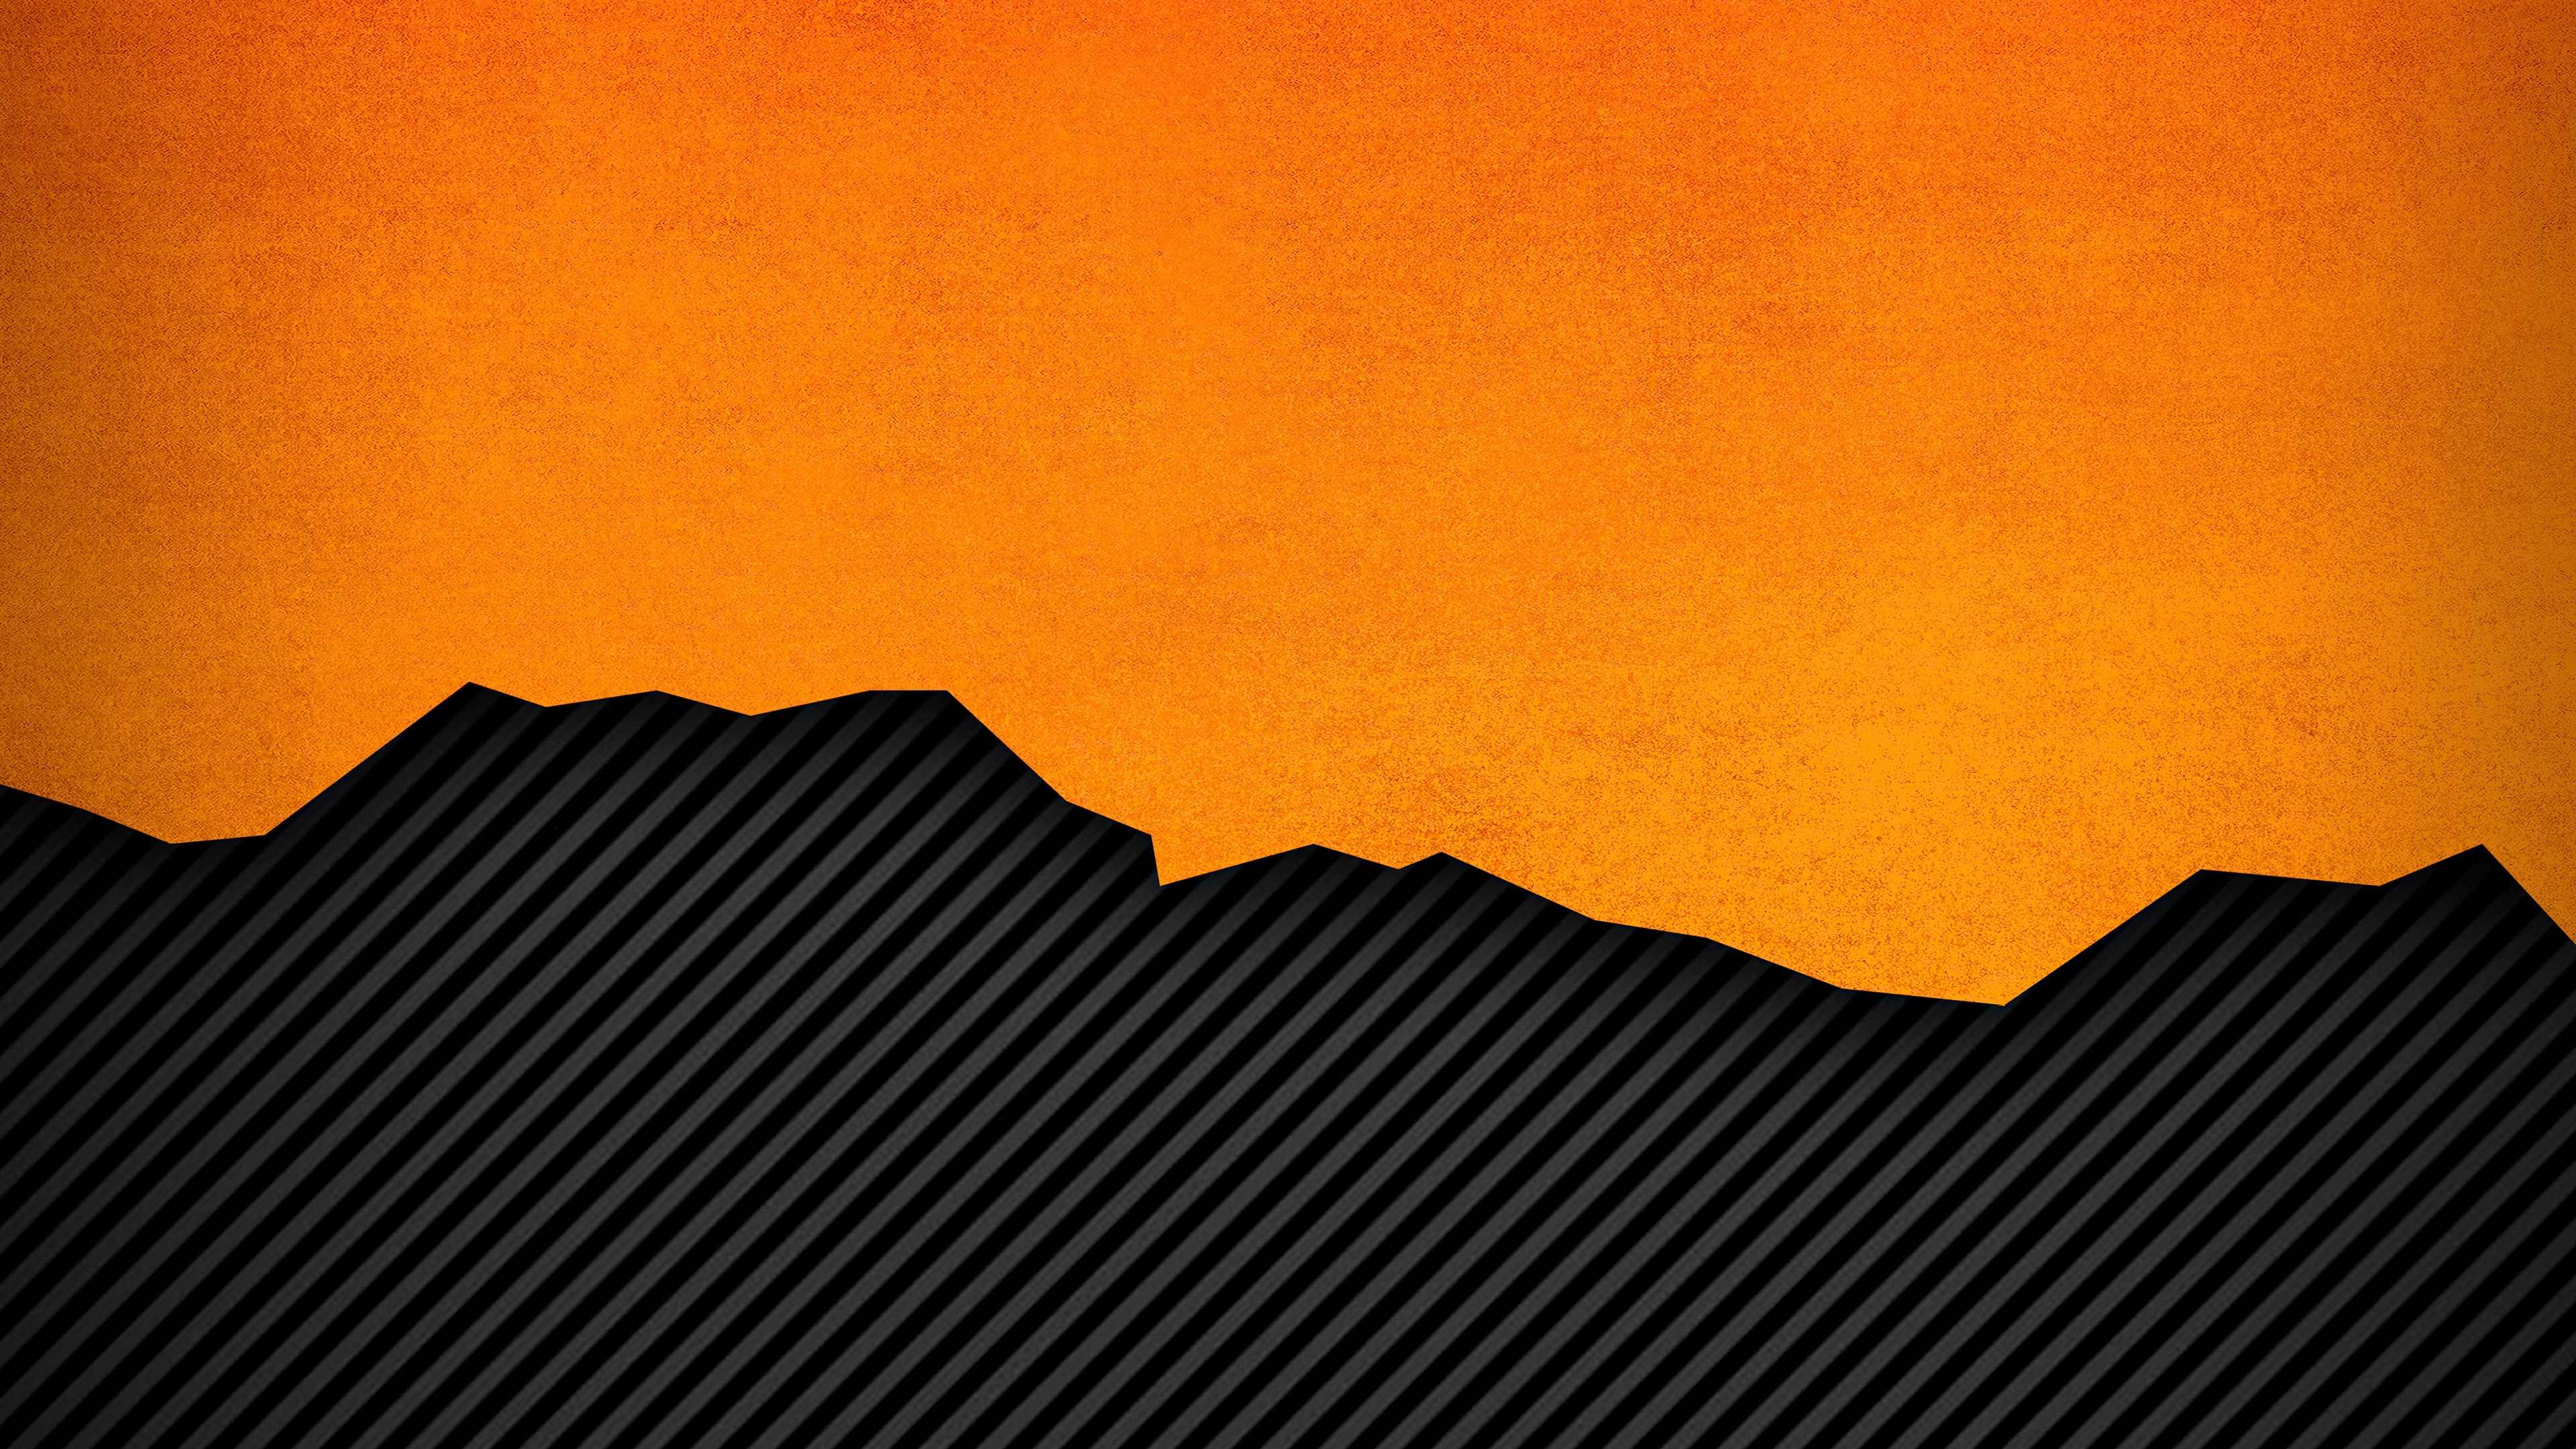 3840x2160 Download orange-black surface, lines, abstract 4k wallpaper, uhd wallpaper, 16:9 widescreen wallpaper, hd image, background, 26743